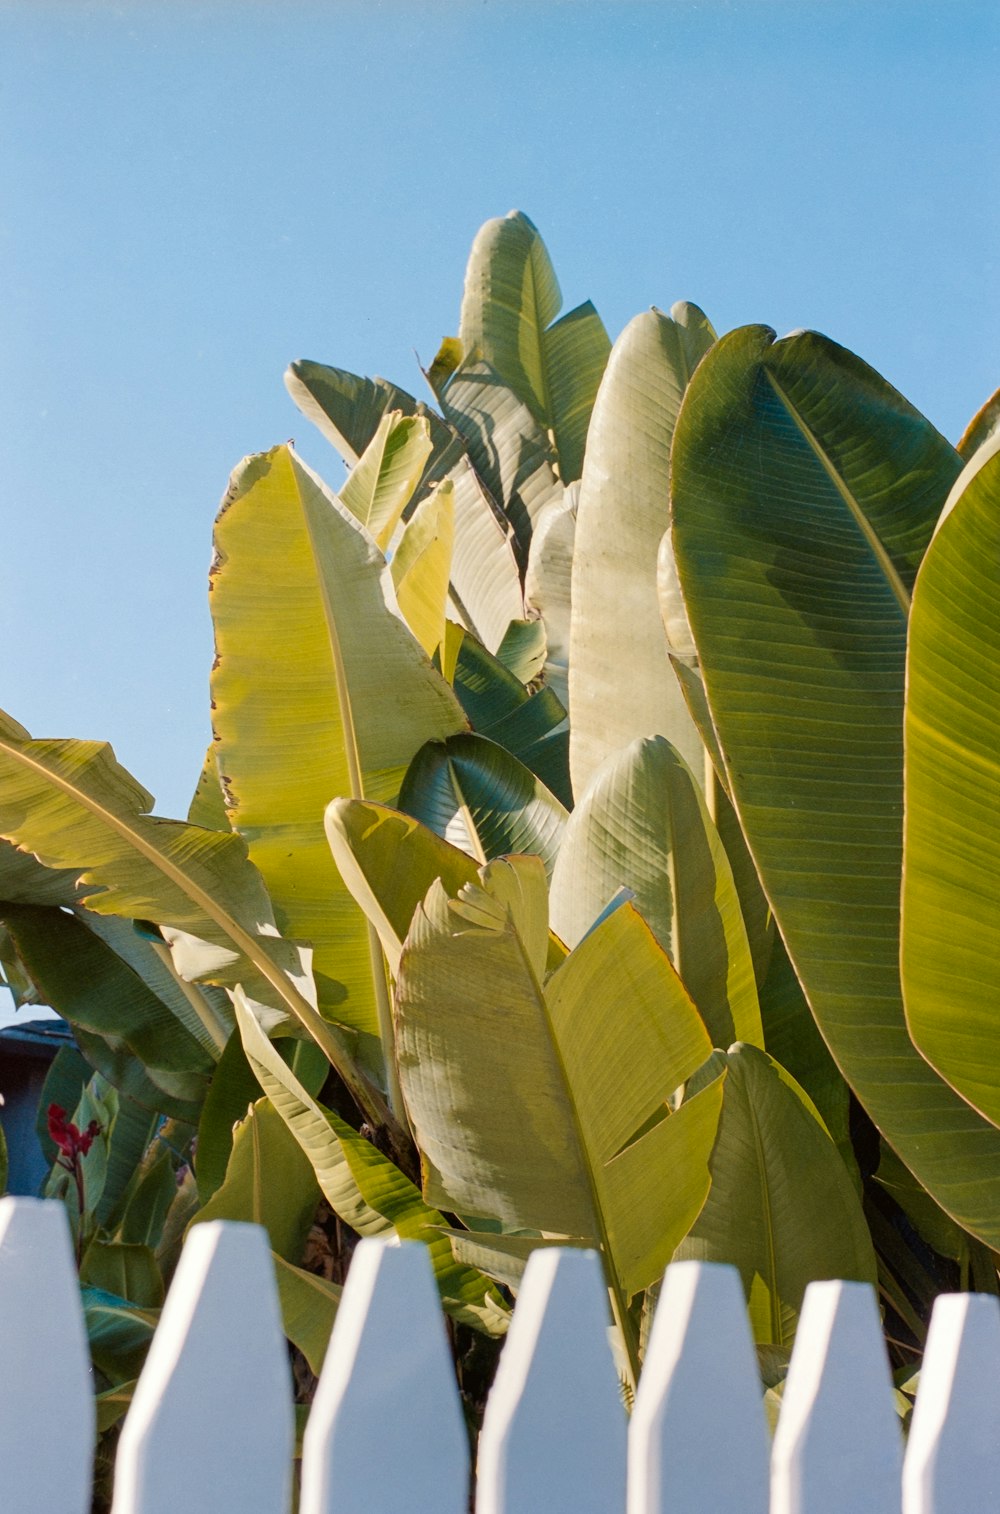 green banana leaves under blue sky during daytime